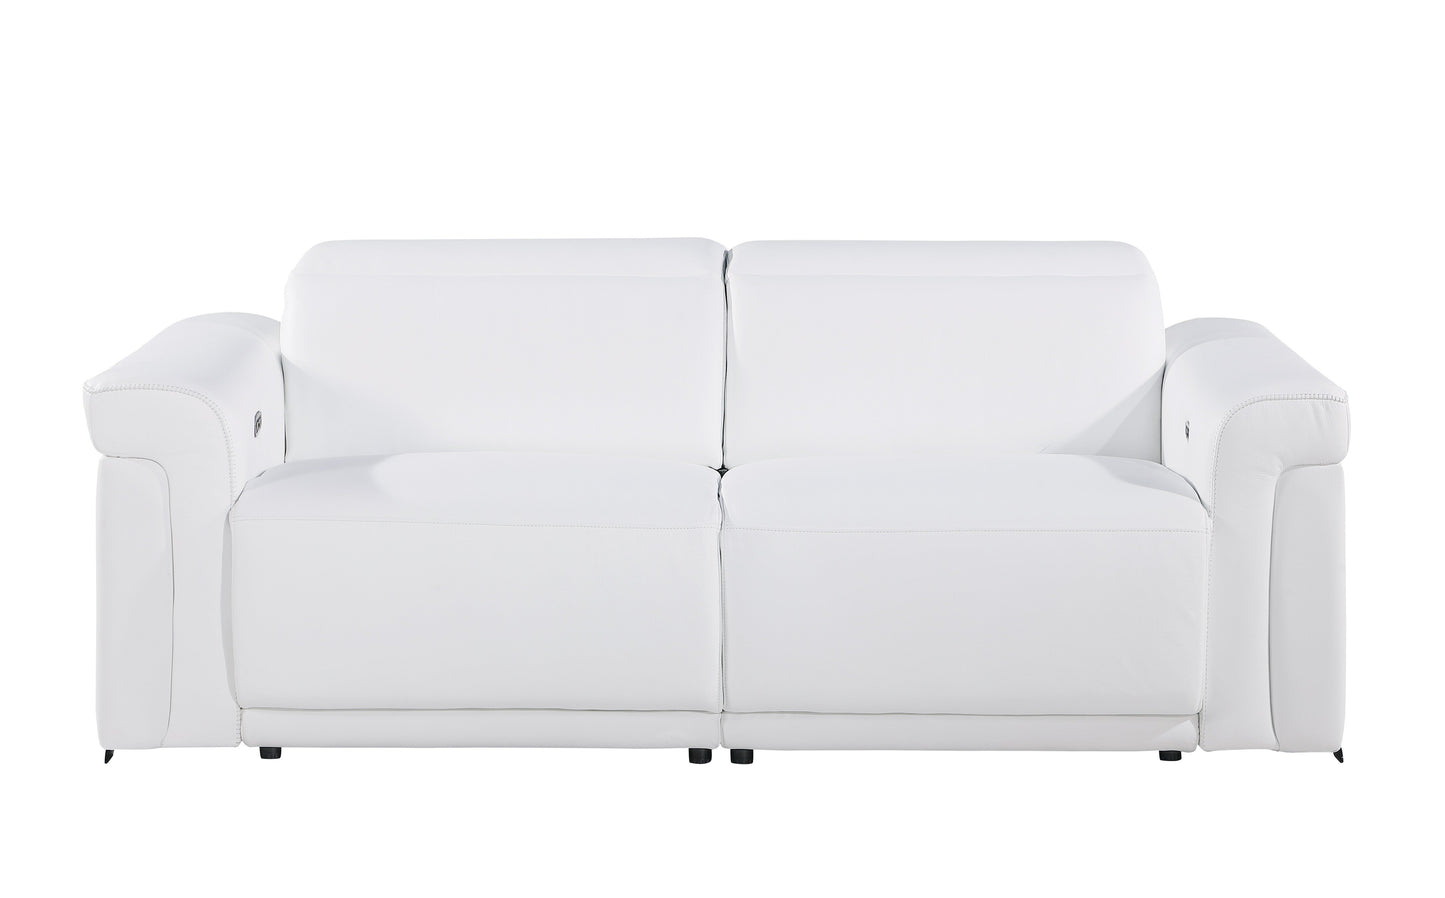 Global United Furniture Sofa Global United 1126 - Divanitalia Power Reclining 2PC Sofa Set